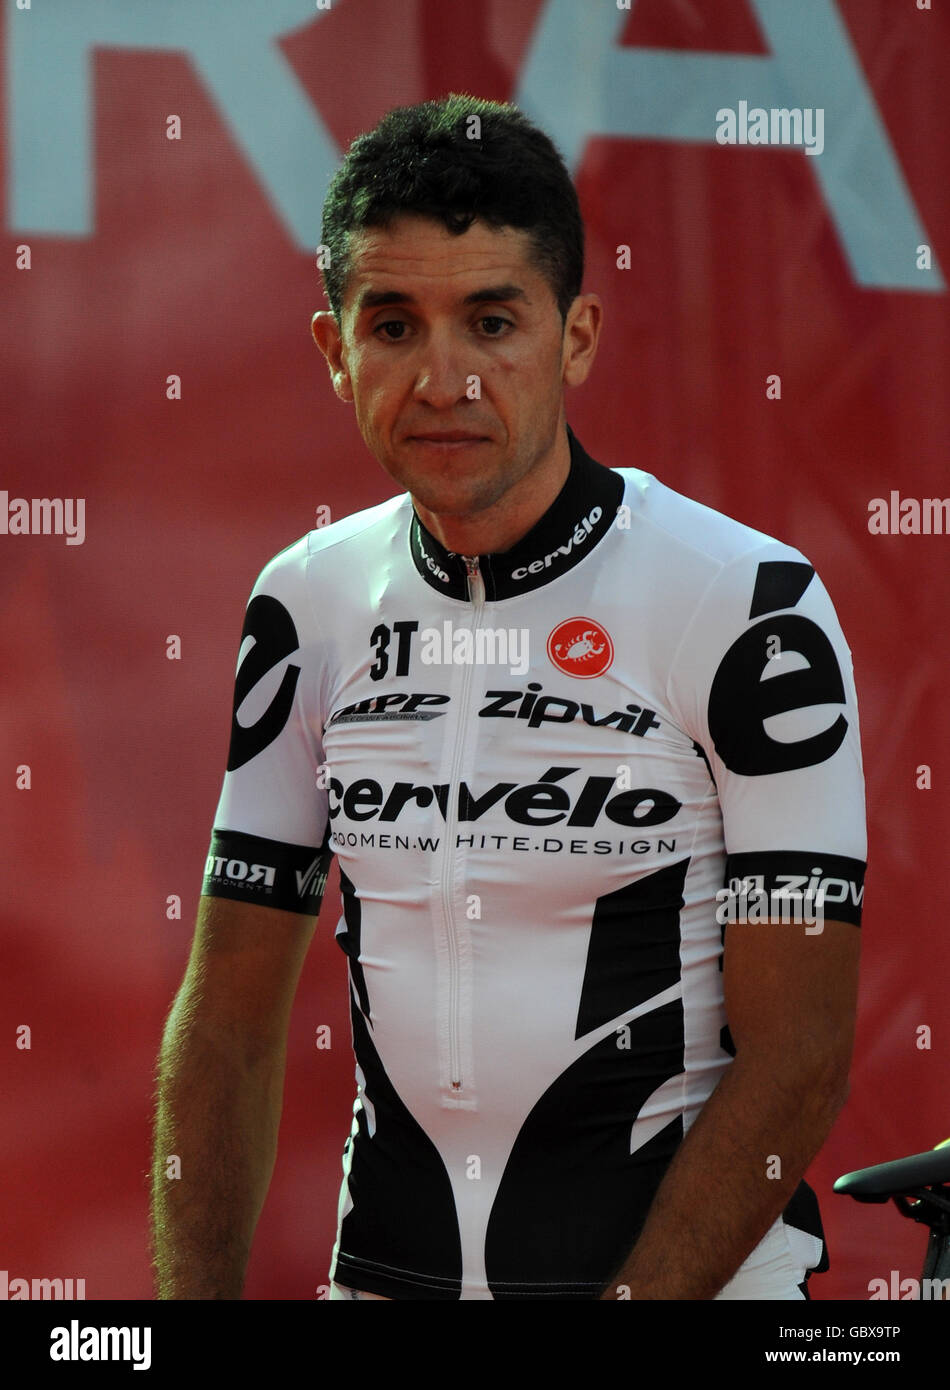 Cycling - Tour de France 2009 - Team Presentations - Monaco. Carlos Sastre (Spain), Cervelo Stock Photo